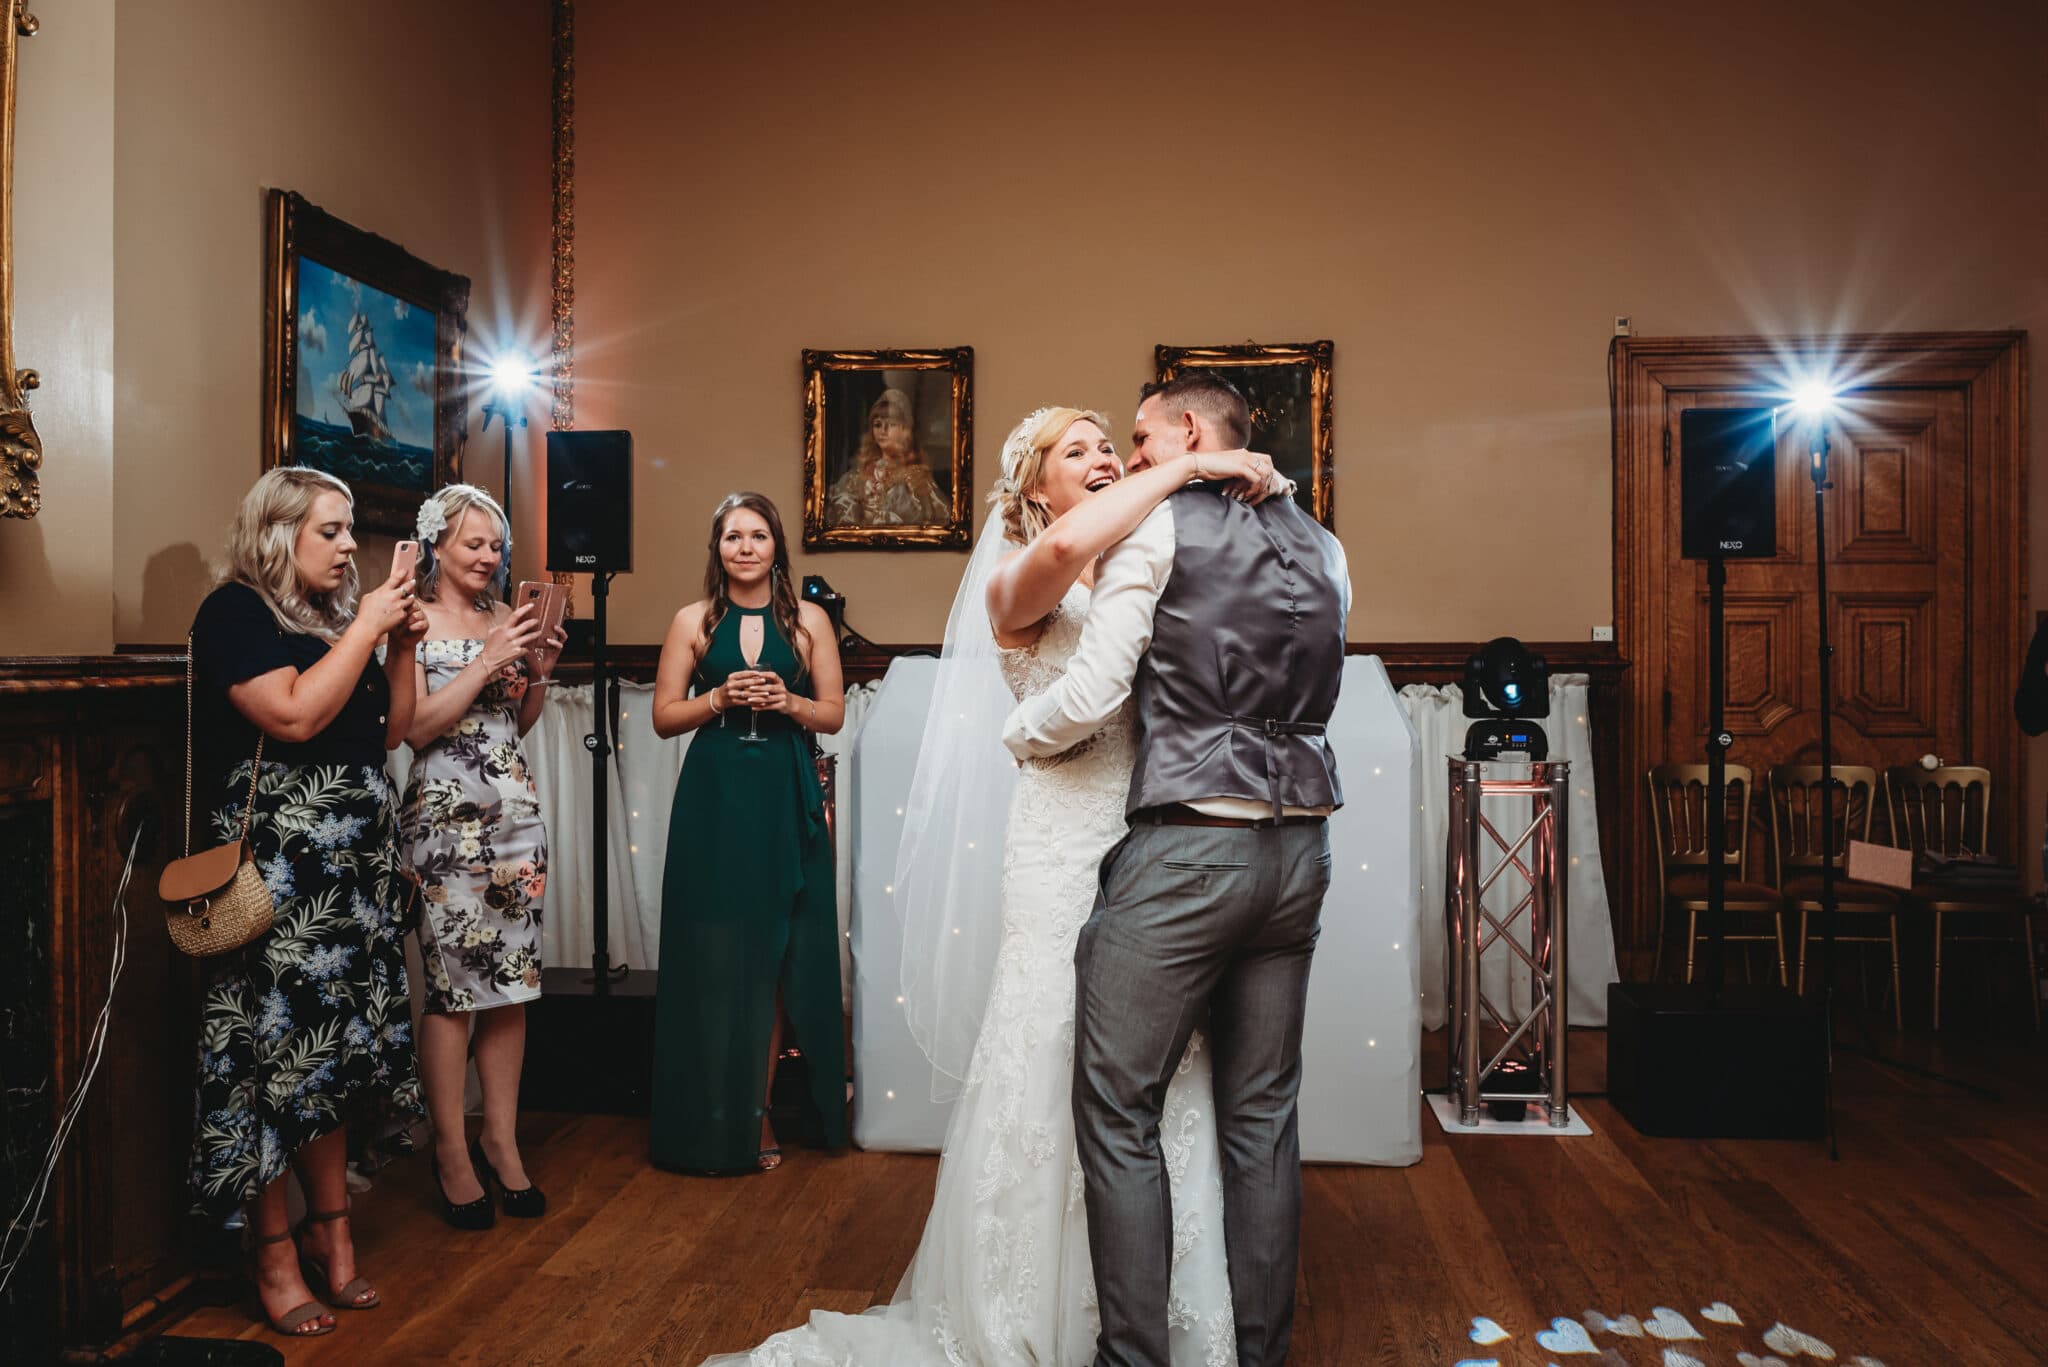 Frist-dance-Orchardleight-wedding-photographer